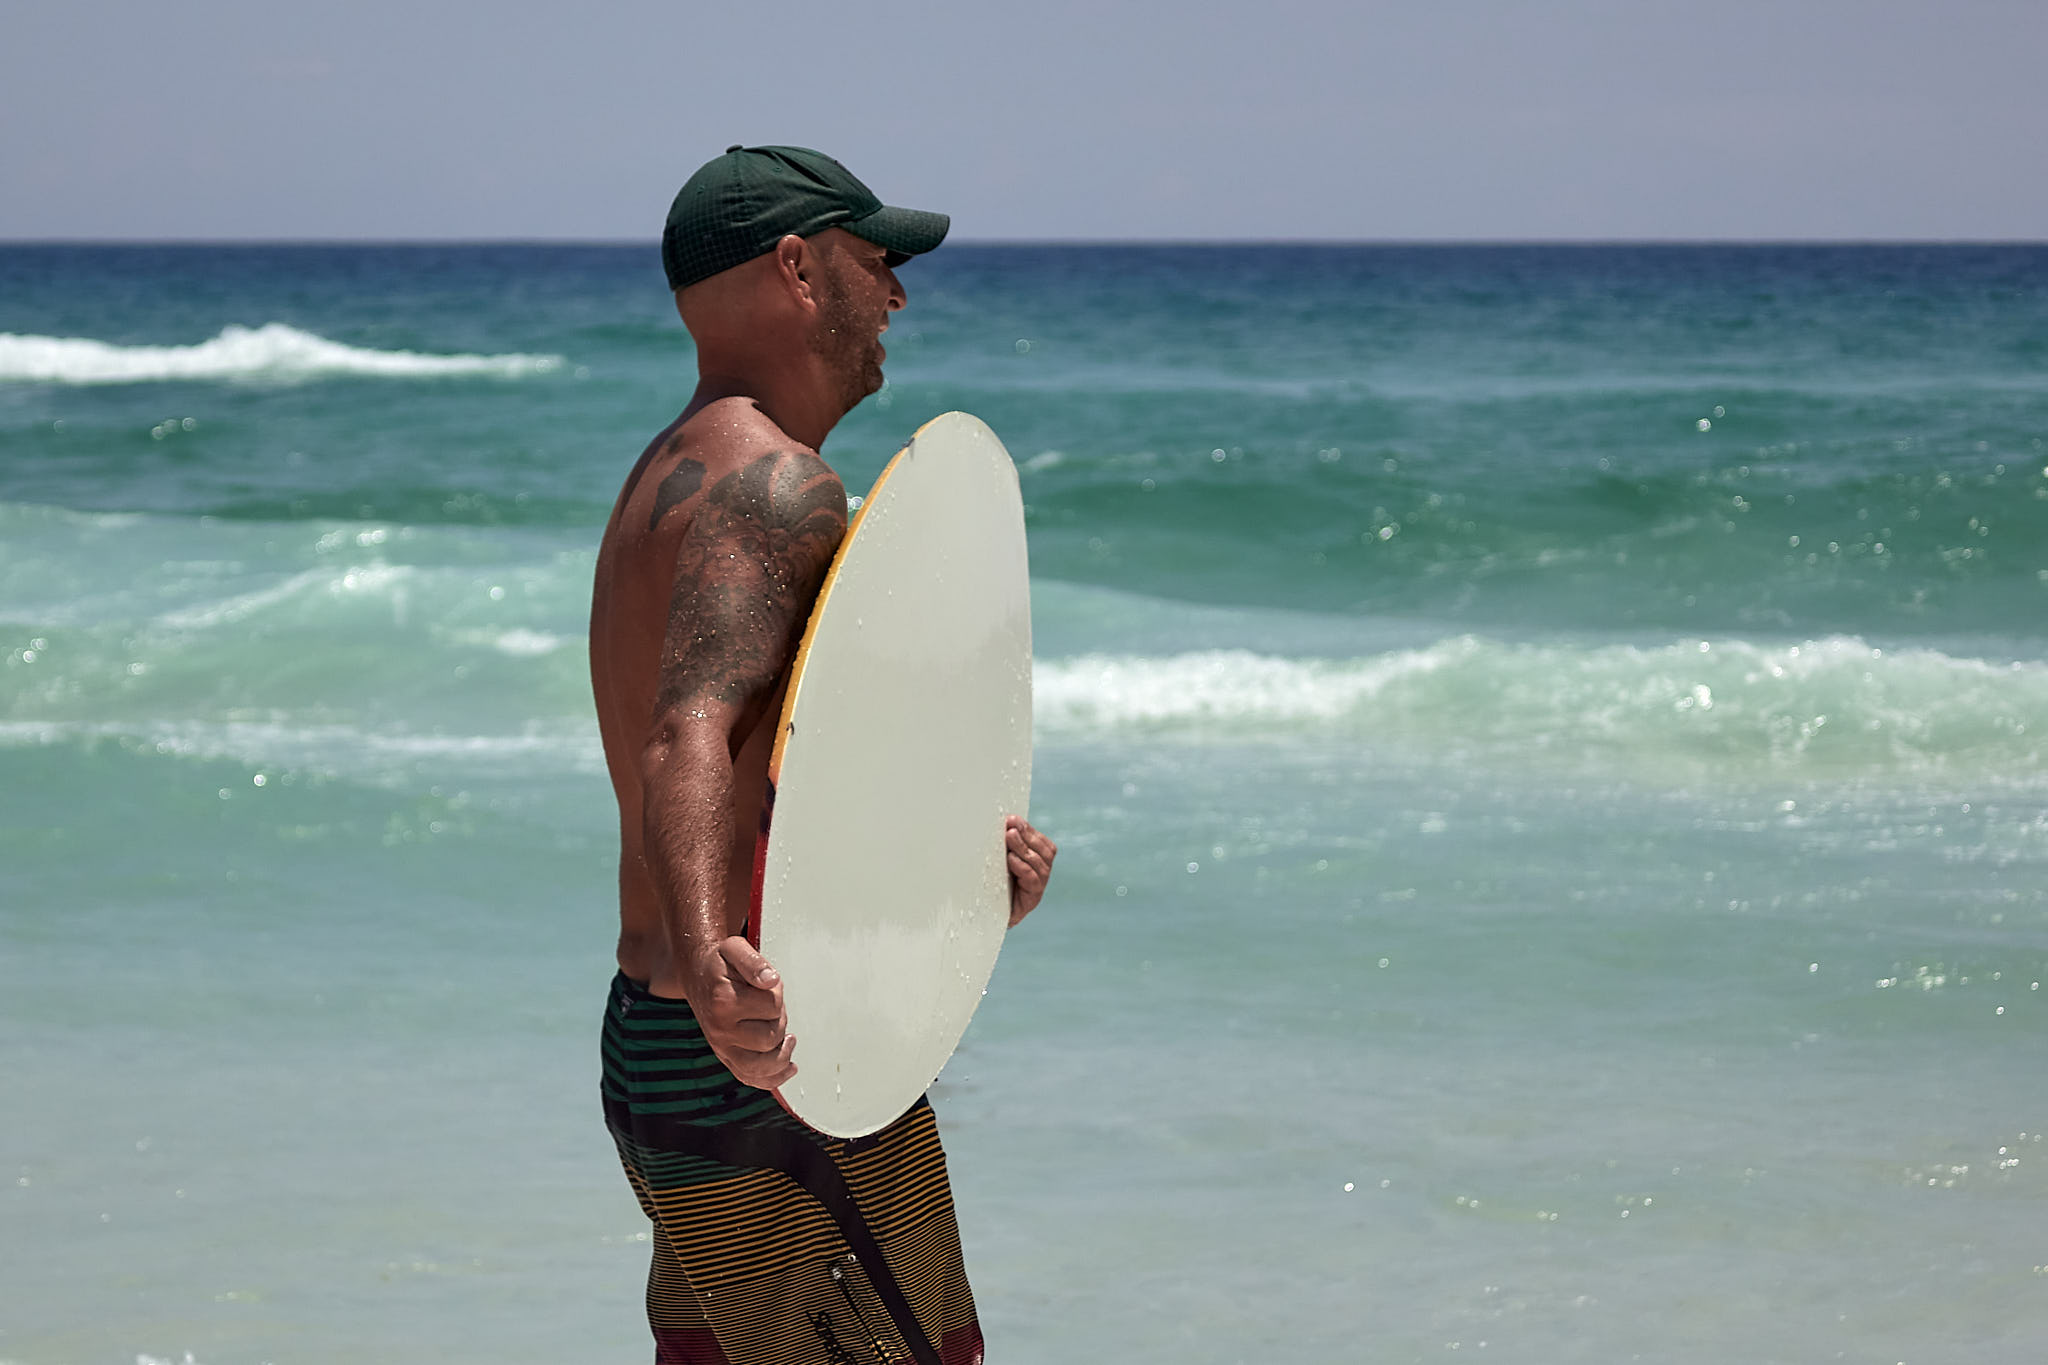 Wakeboarder on the beach in Destin, FL.